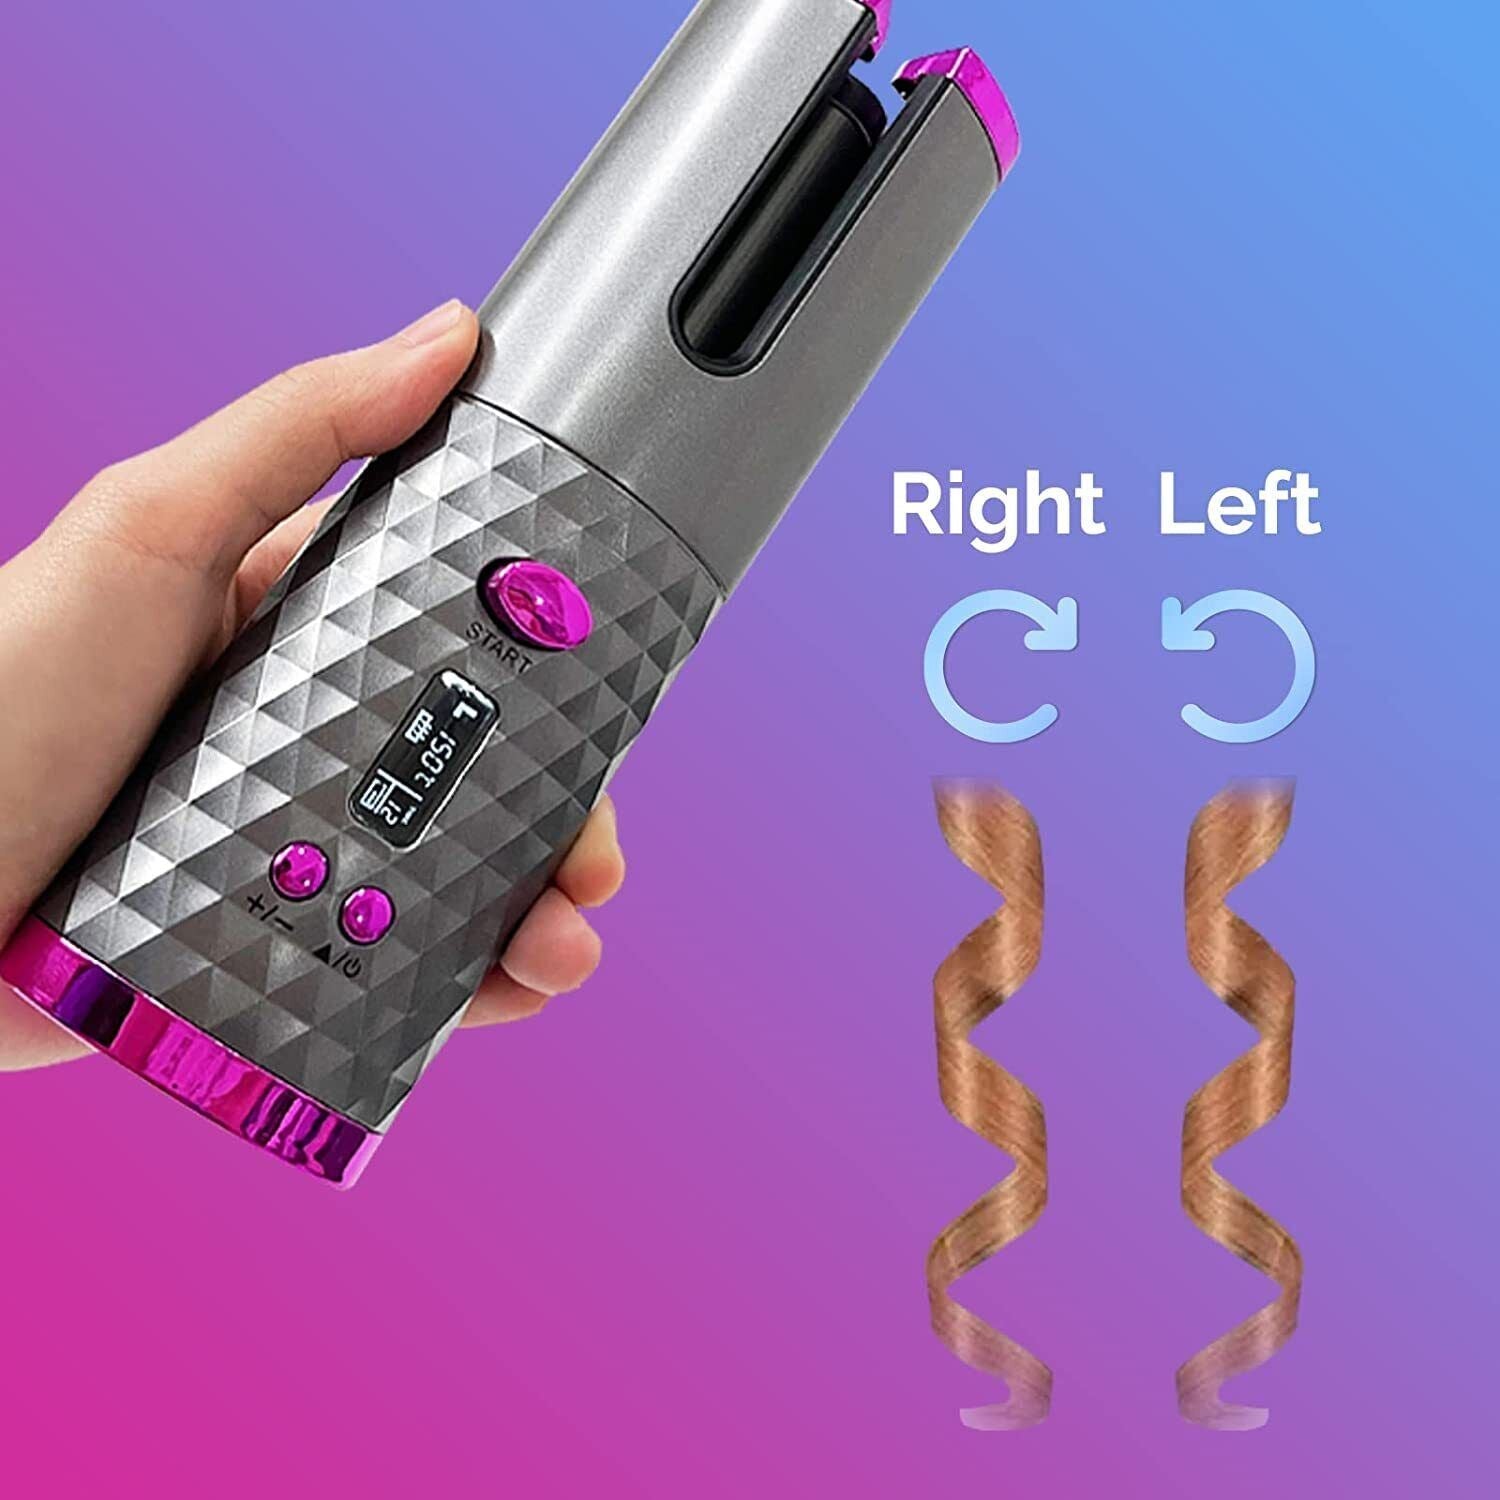 Portable Hair Curler